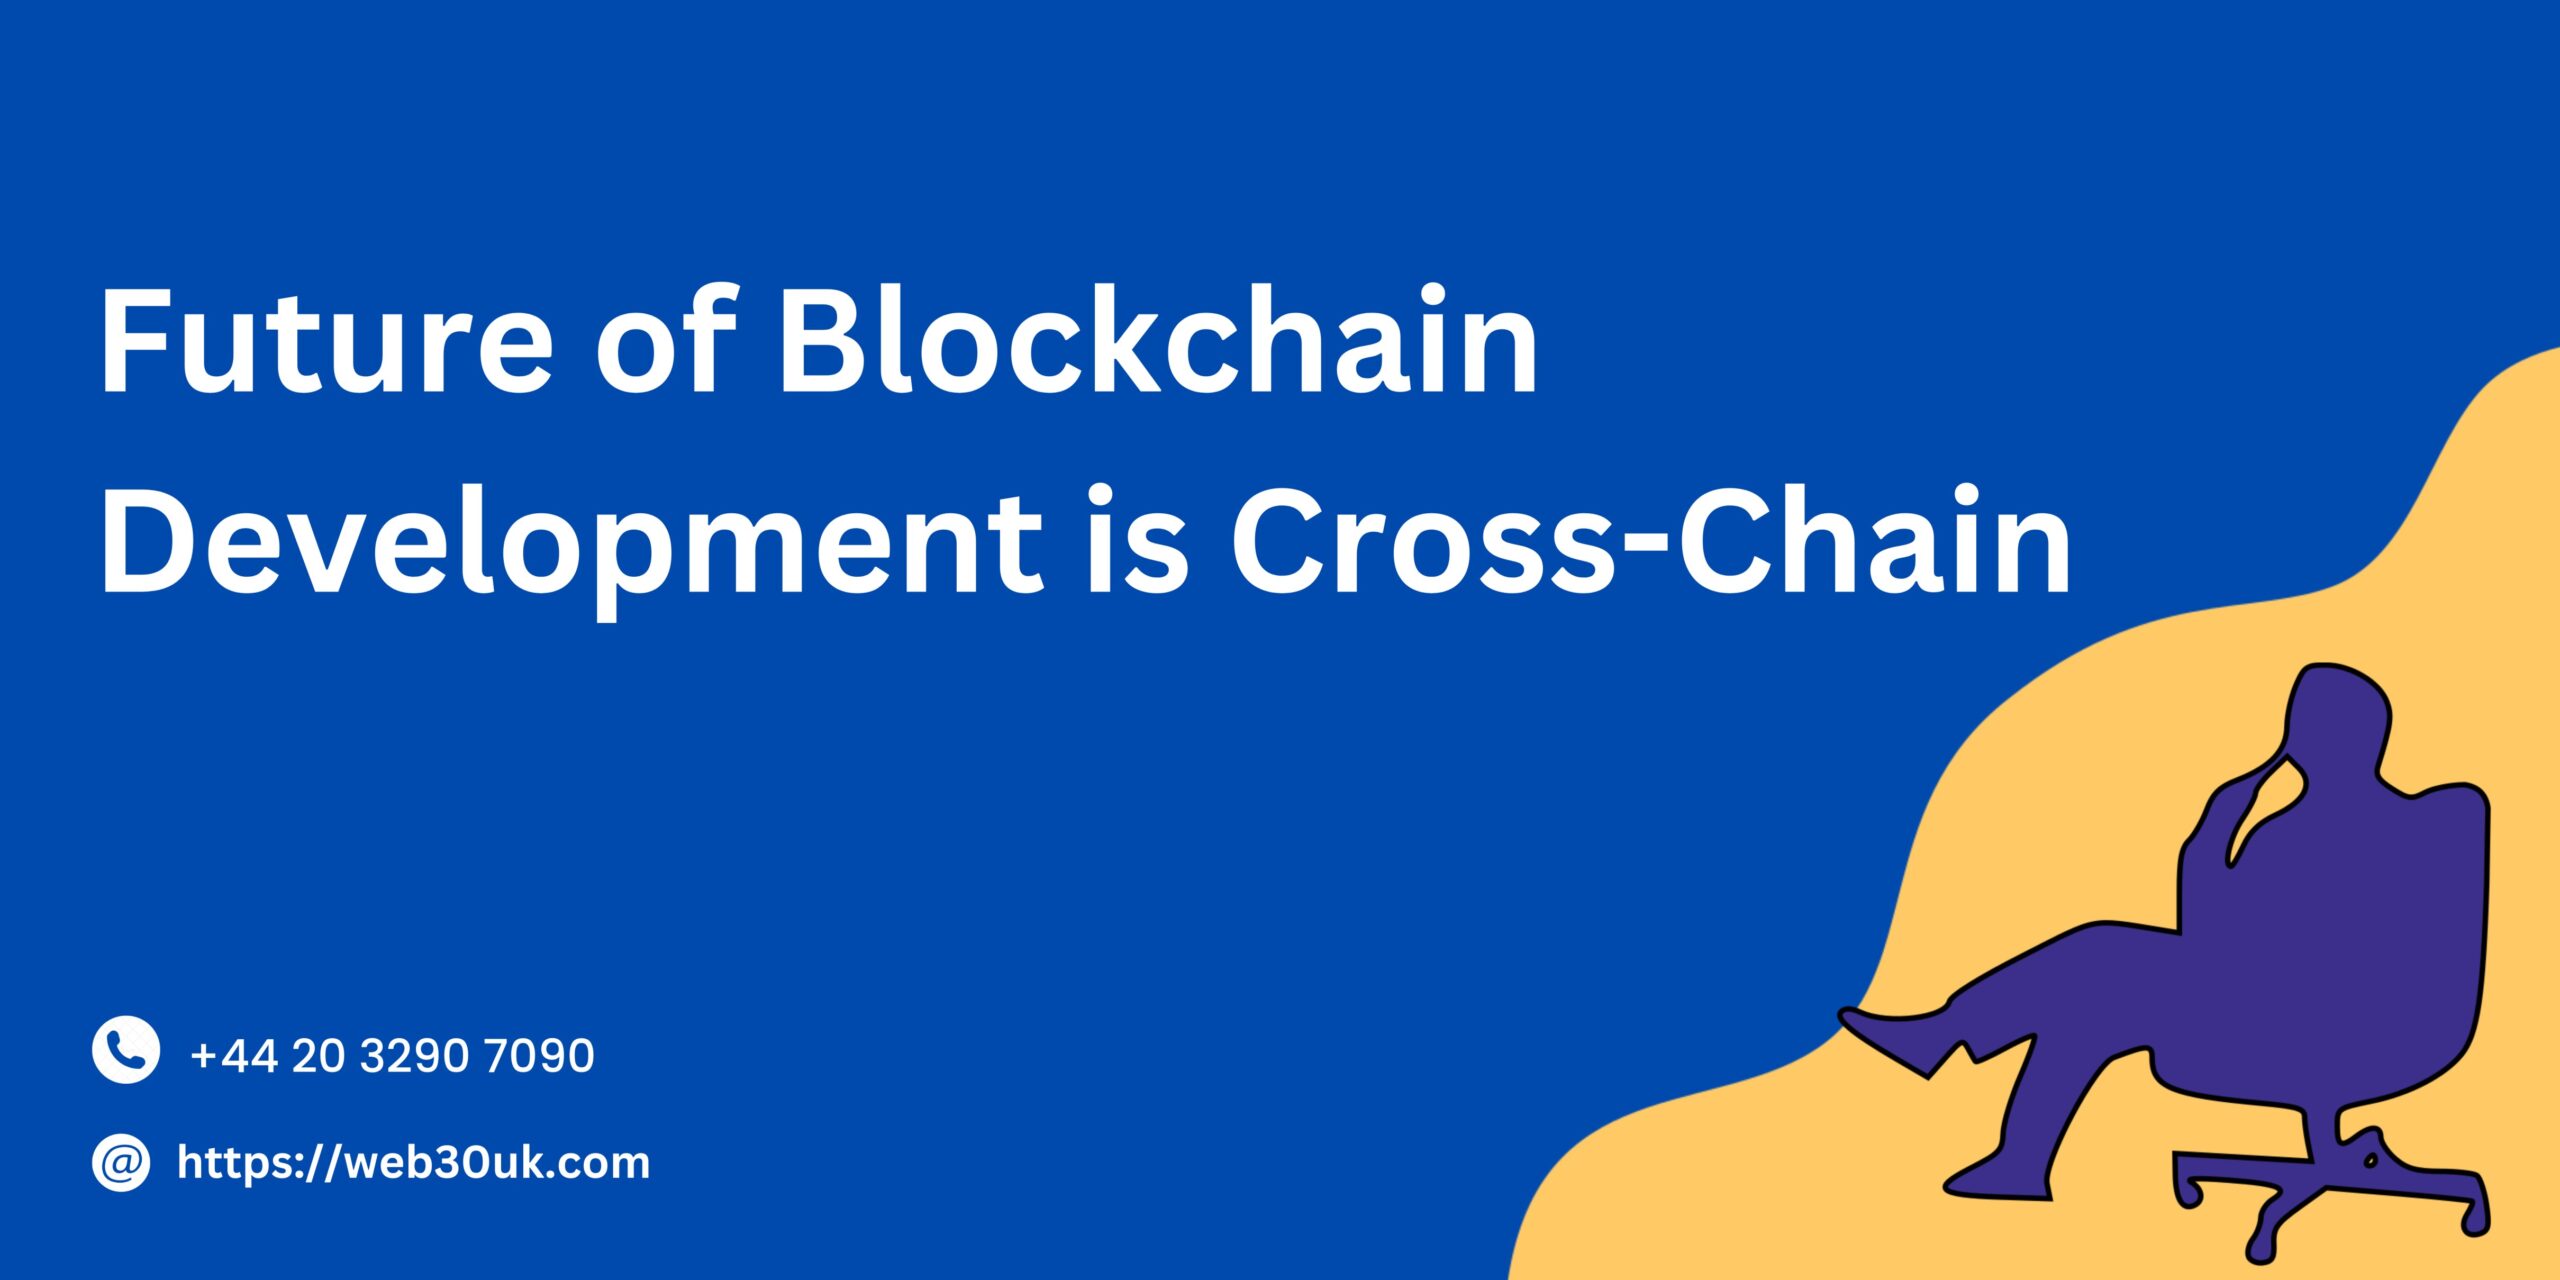 The Next Phase of Blockchain Development is Cross-Chain